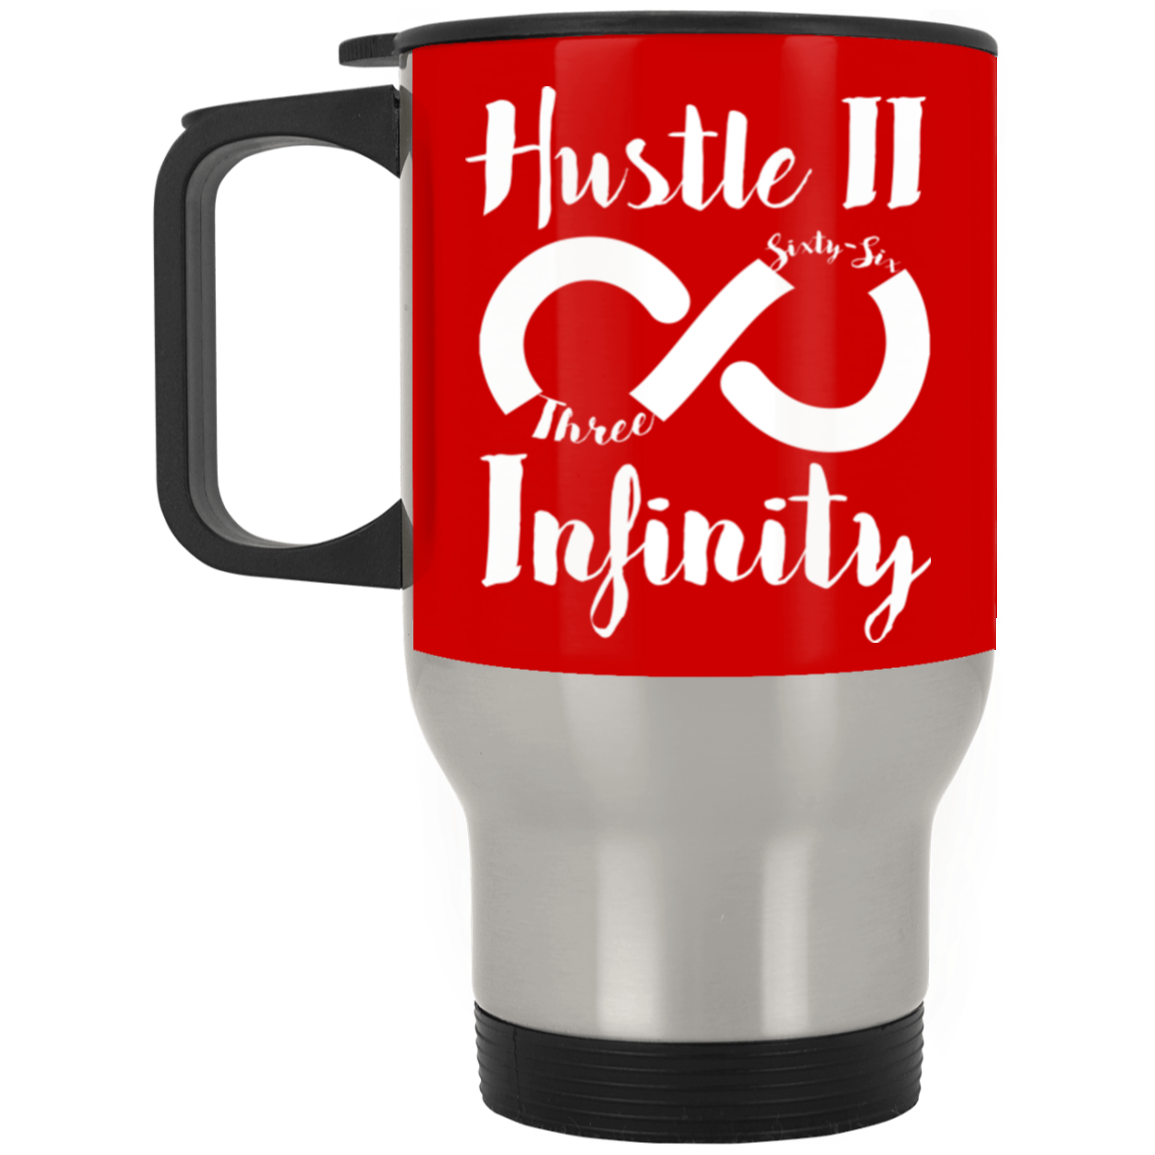 Hustle II Infinity Stainless Travel Mug